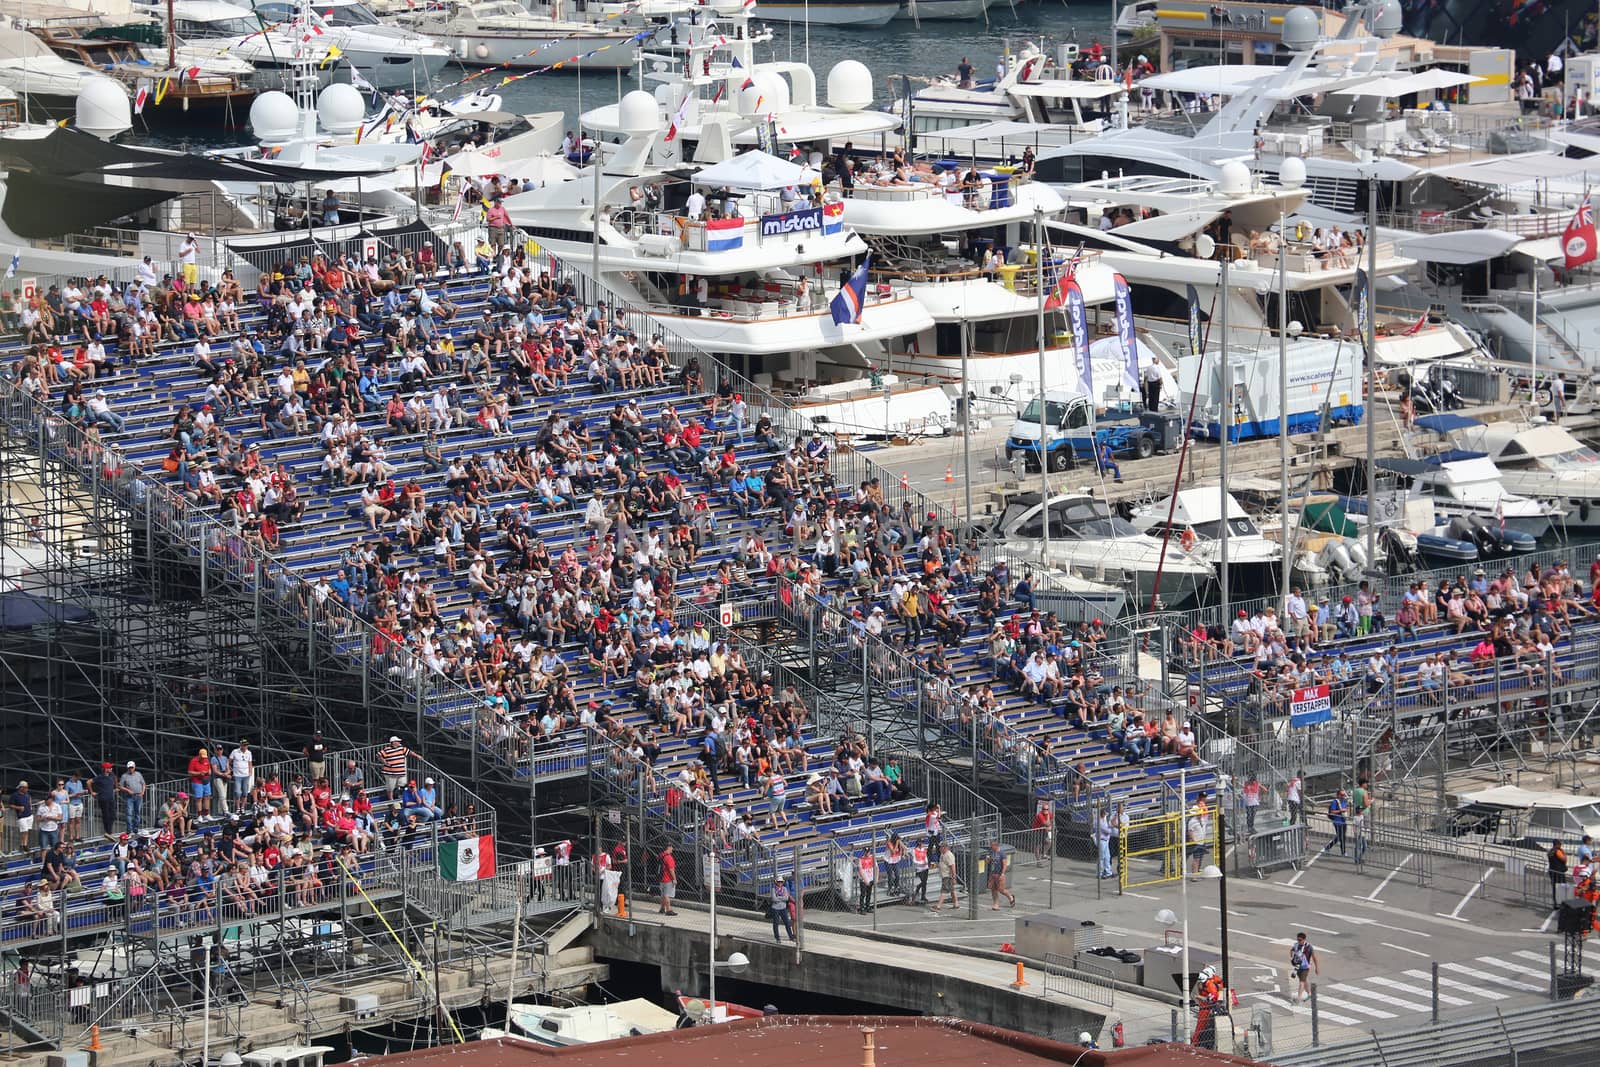 Spectators watch the Monaco Grand Prix 2016 by bensib